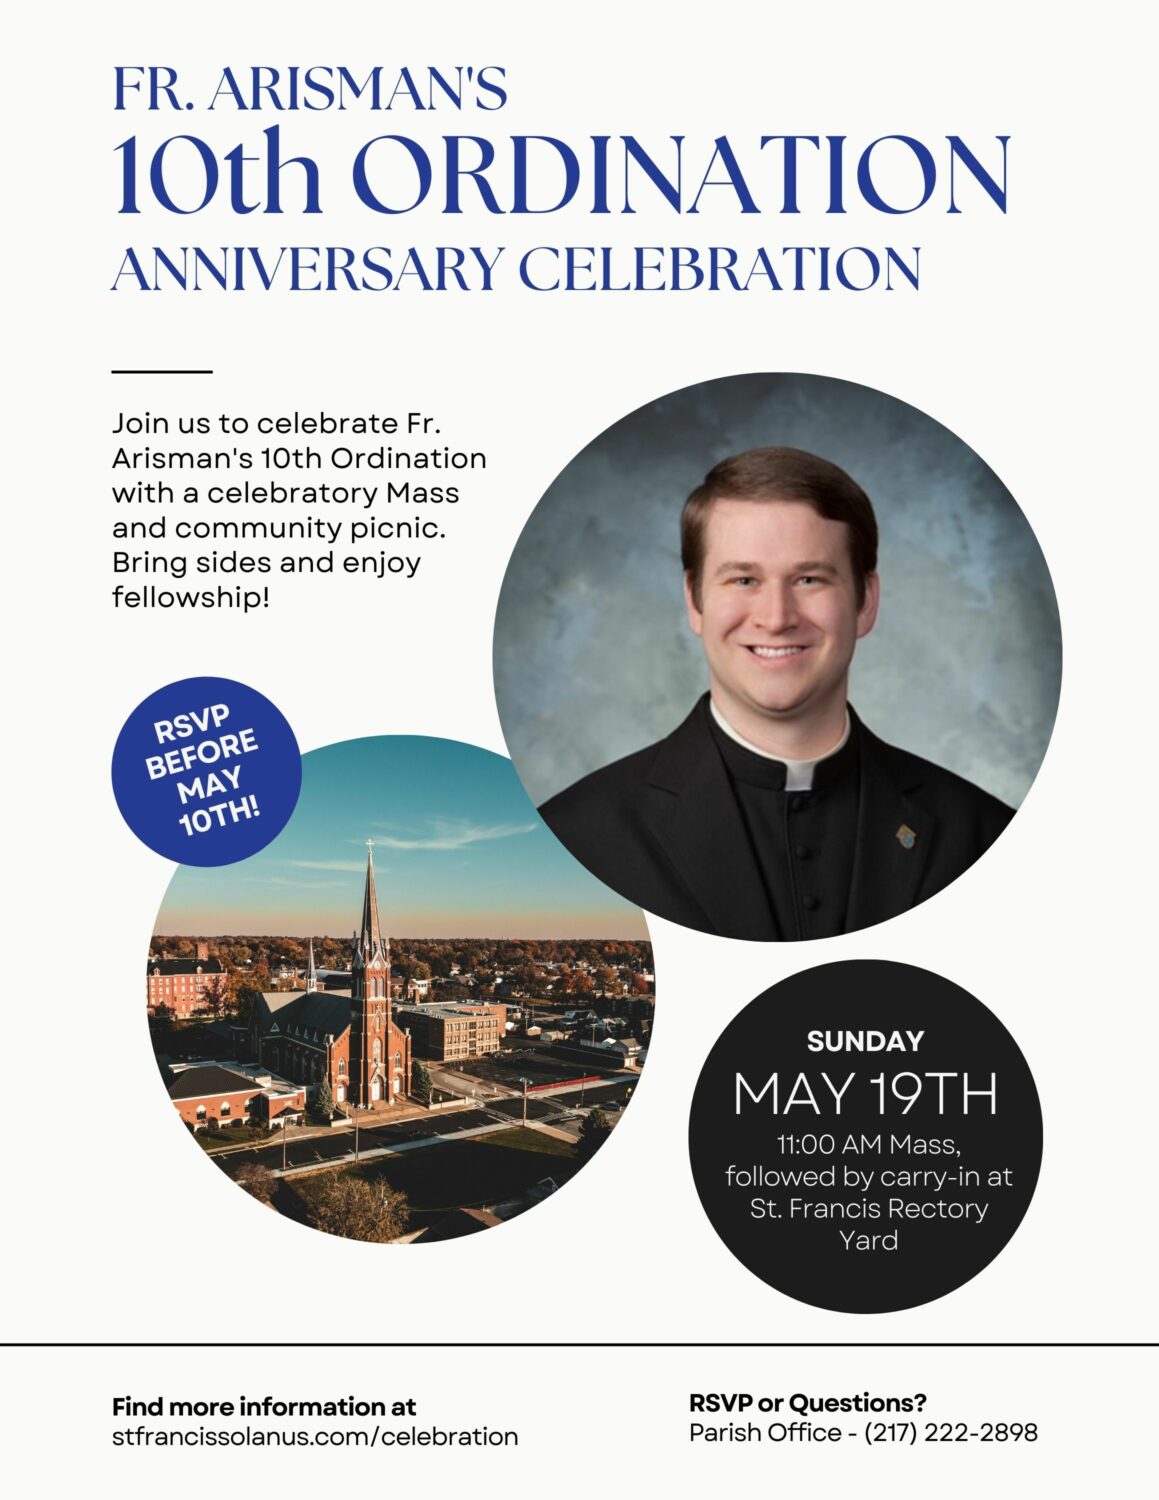 Fr. Arisman's 10th Ordination Anniversary Celebration